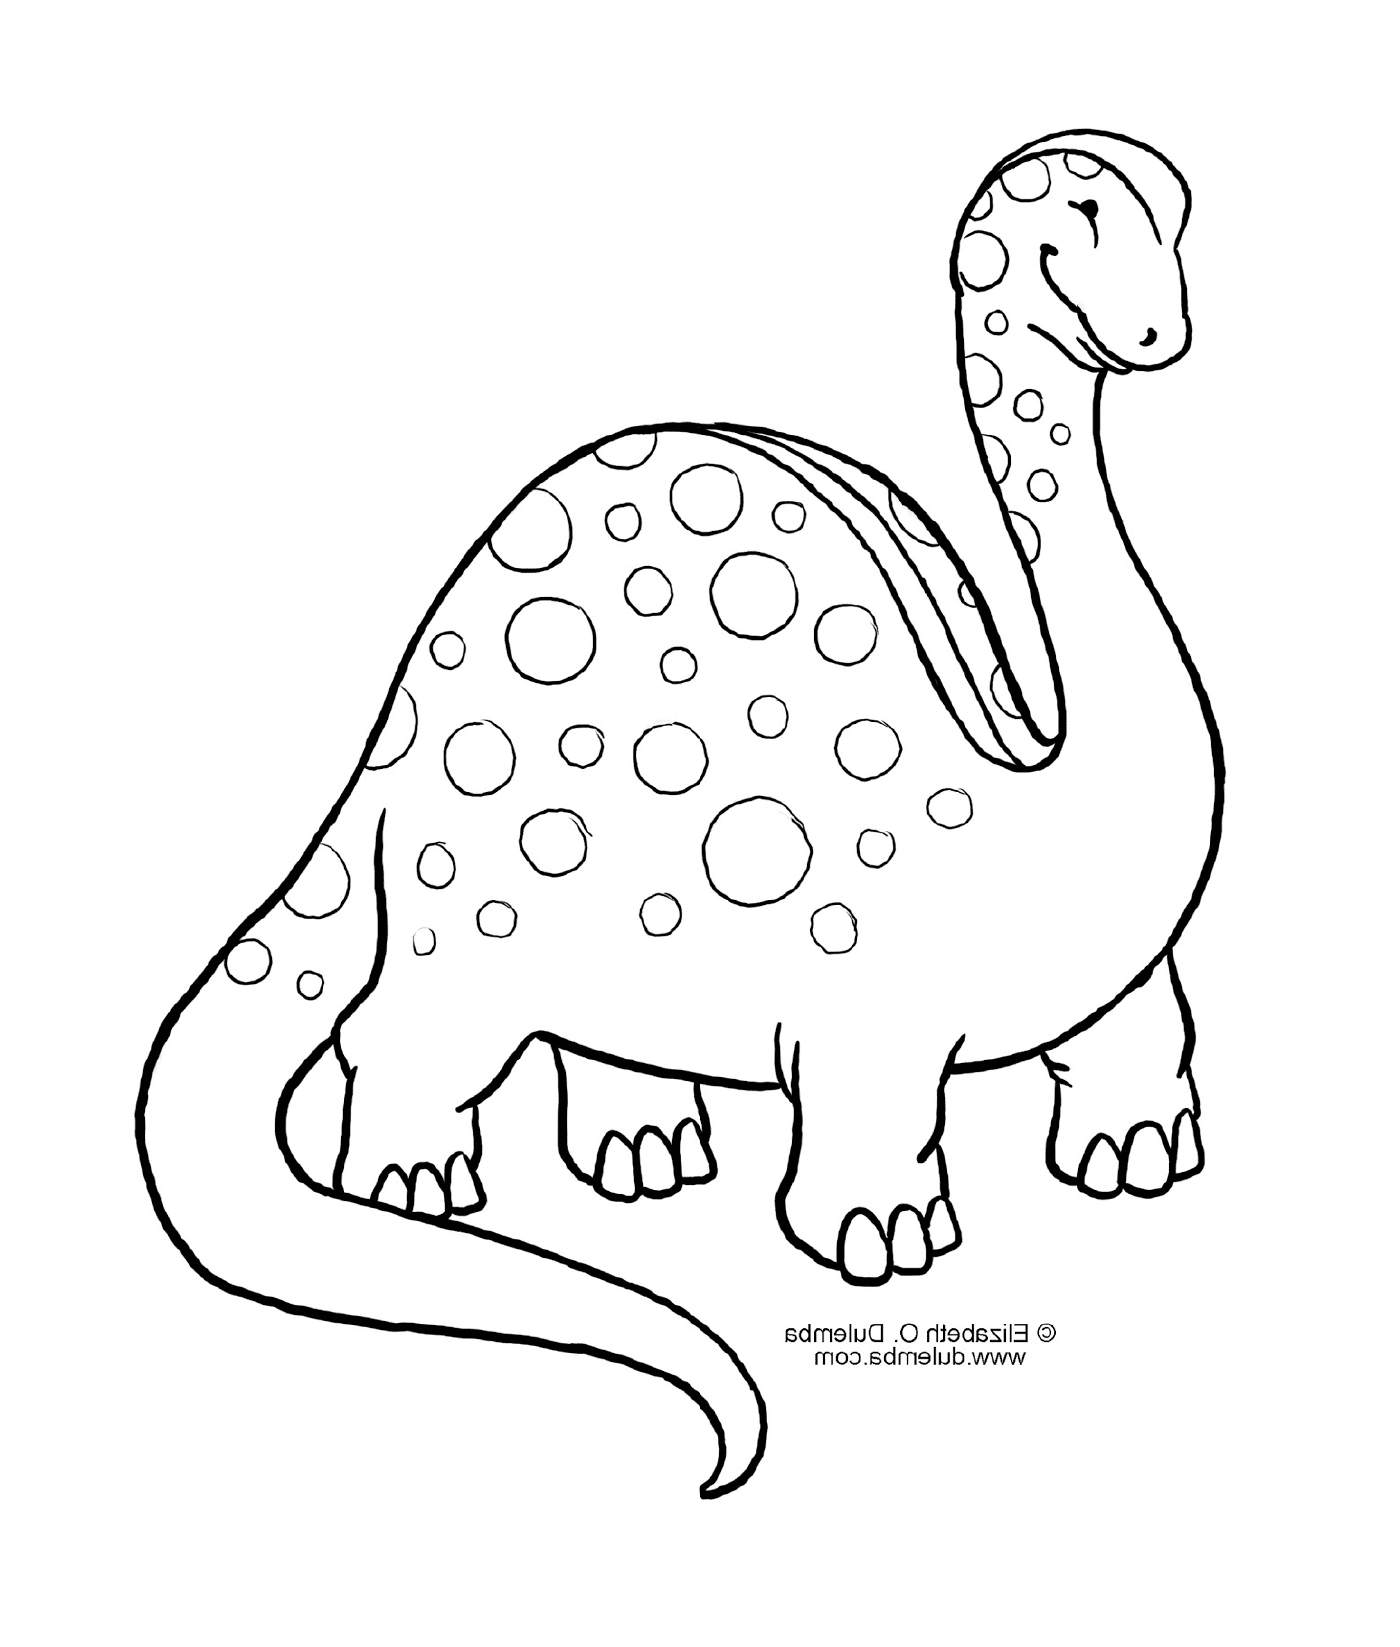  A dinosaur with spots 